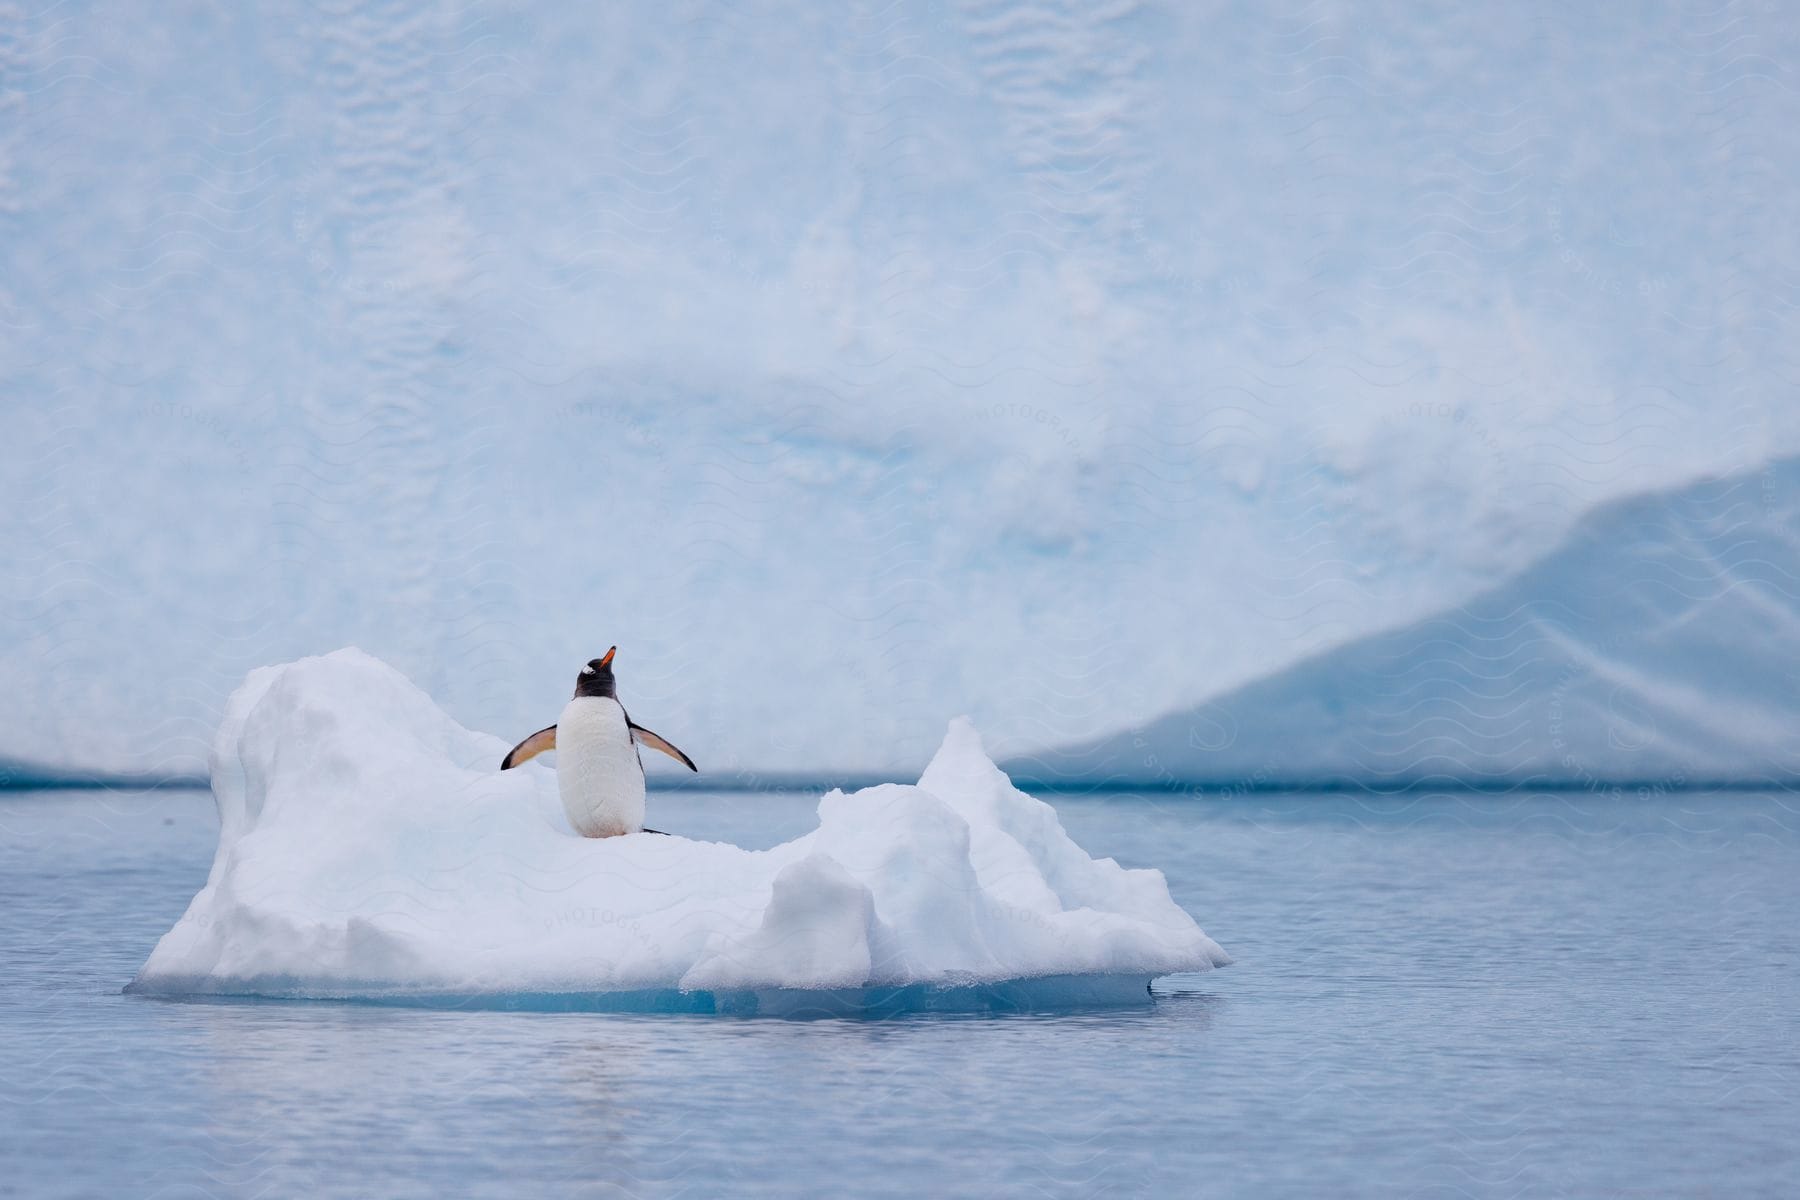 A penguin on an iceberg in a calm blue sea.